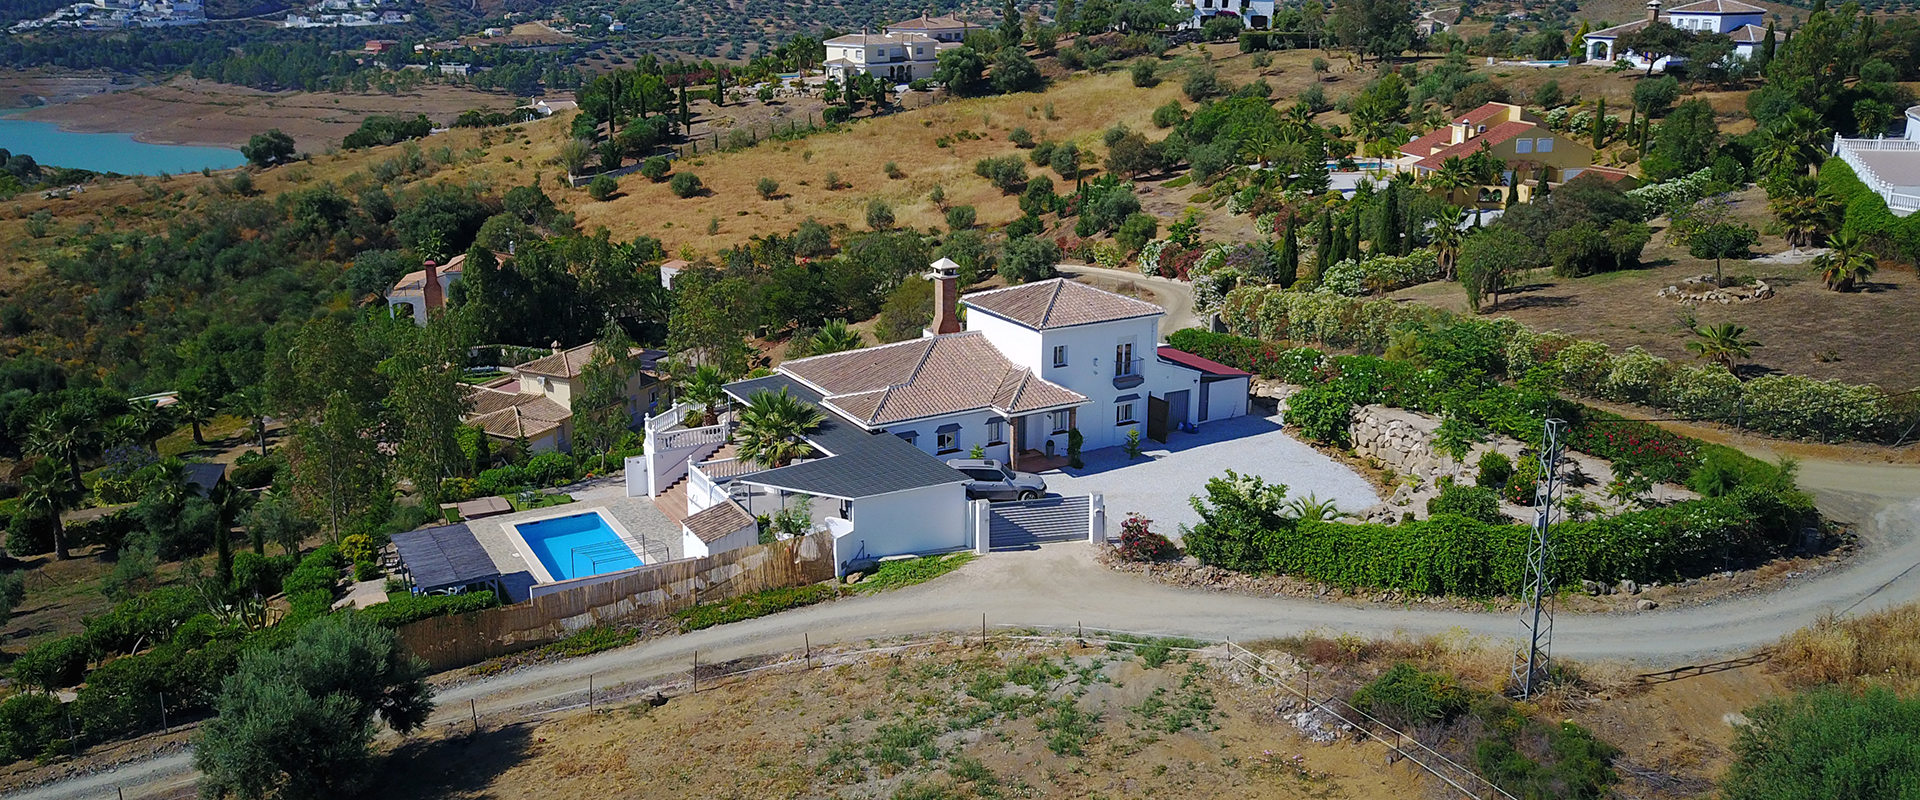 Andalucian Villa Rentals Holiday Rentals In Andalucia Rent A